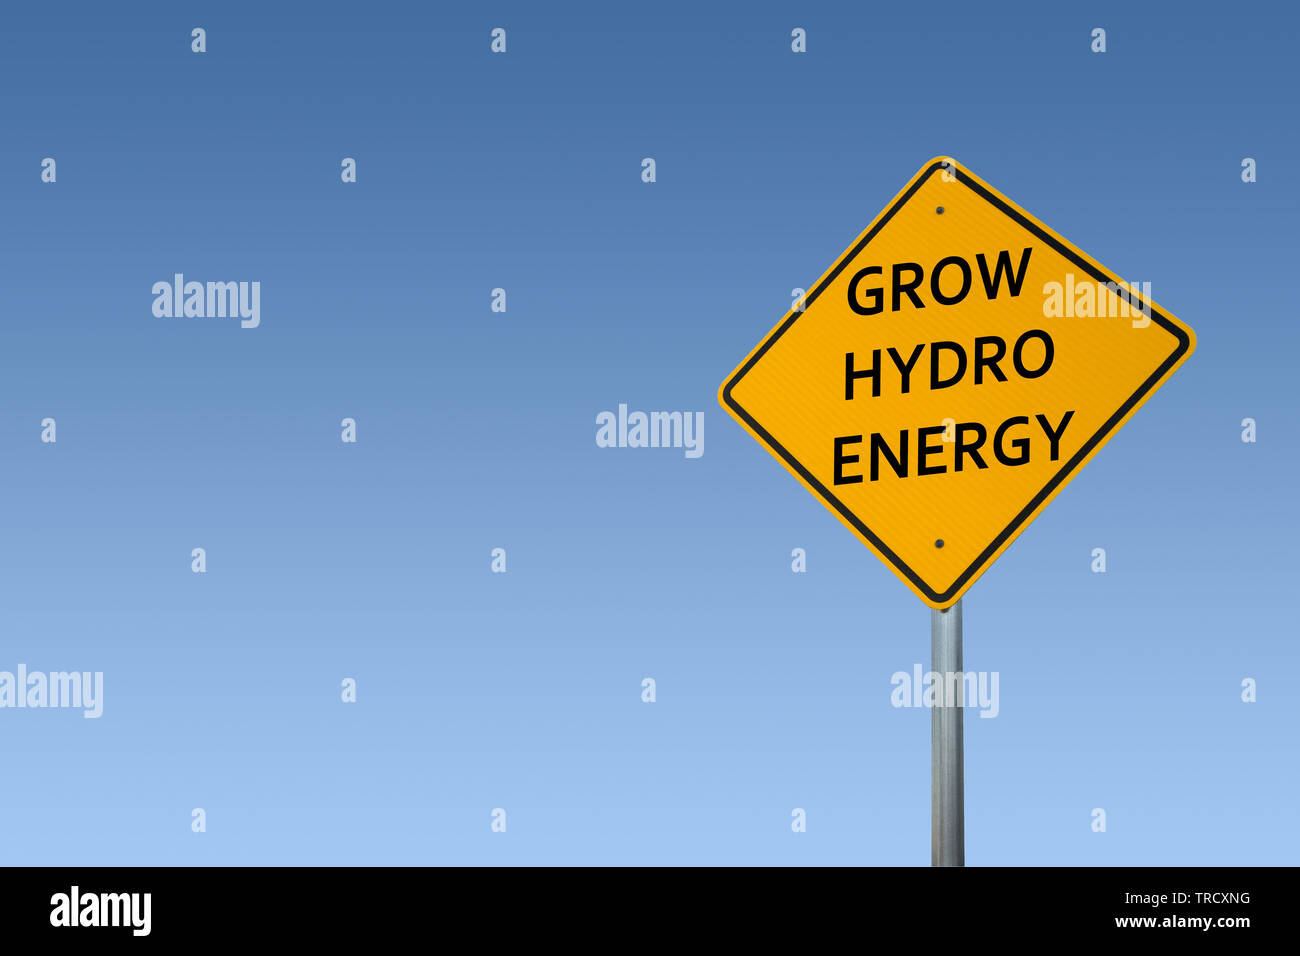 Grow Hydro Energy Stock Photo